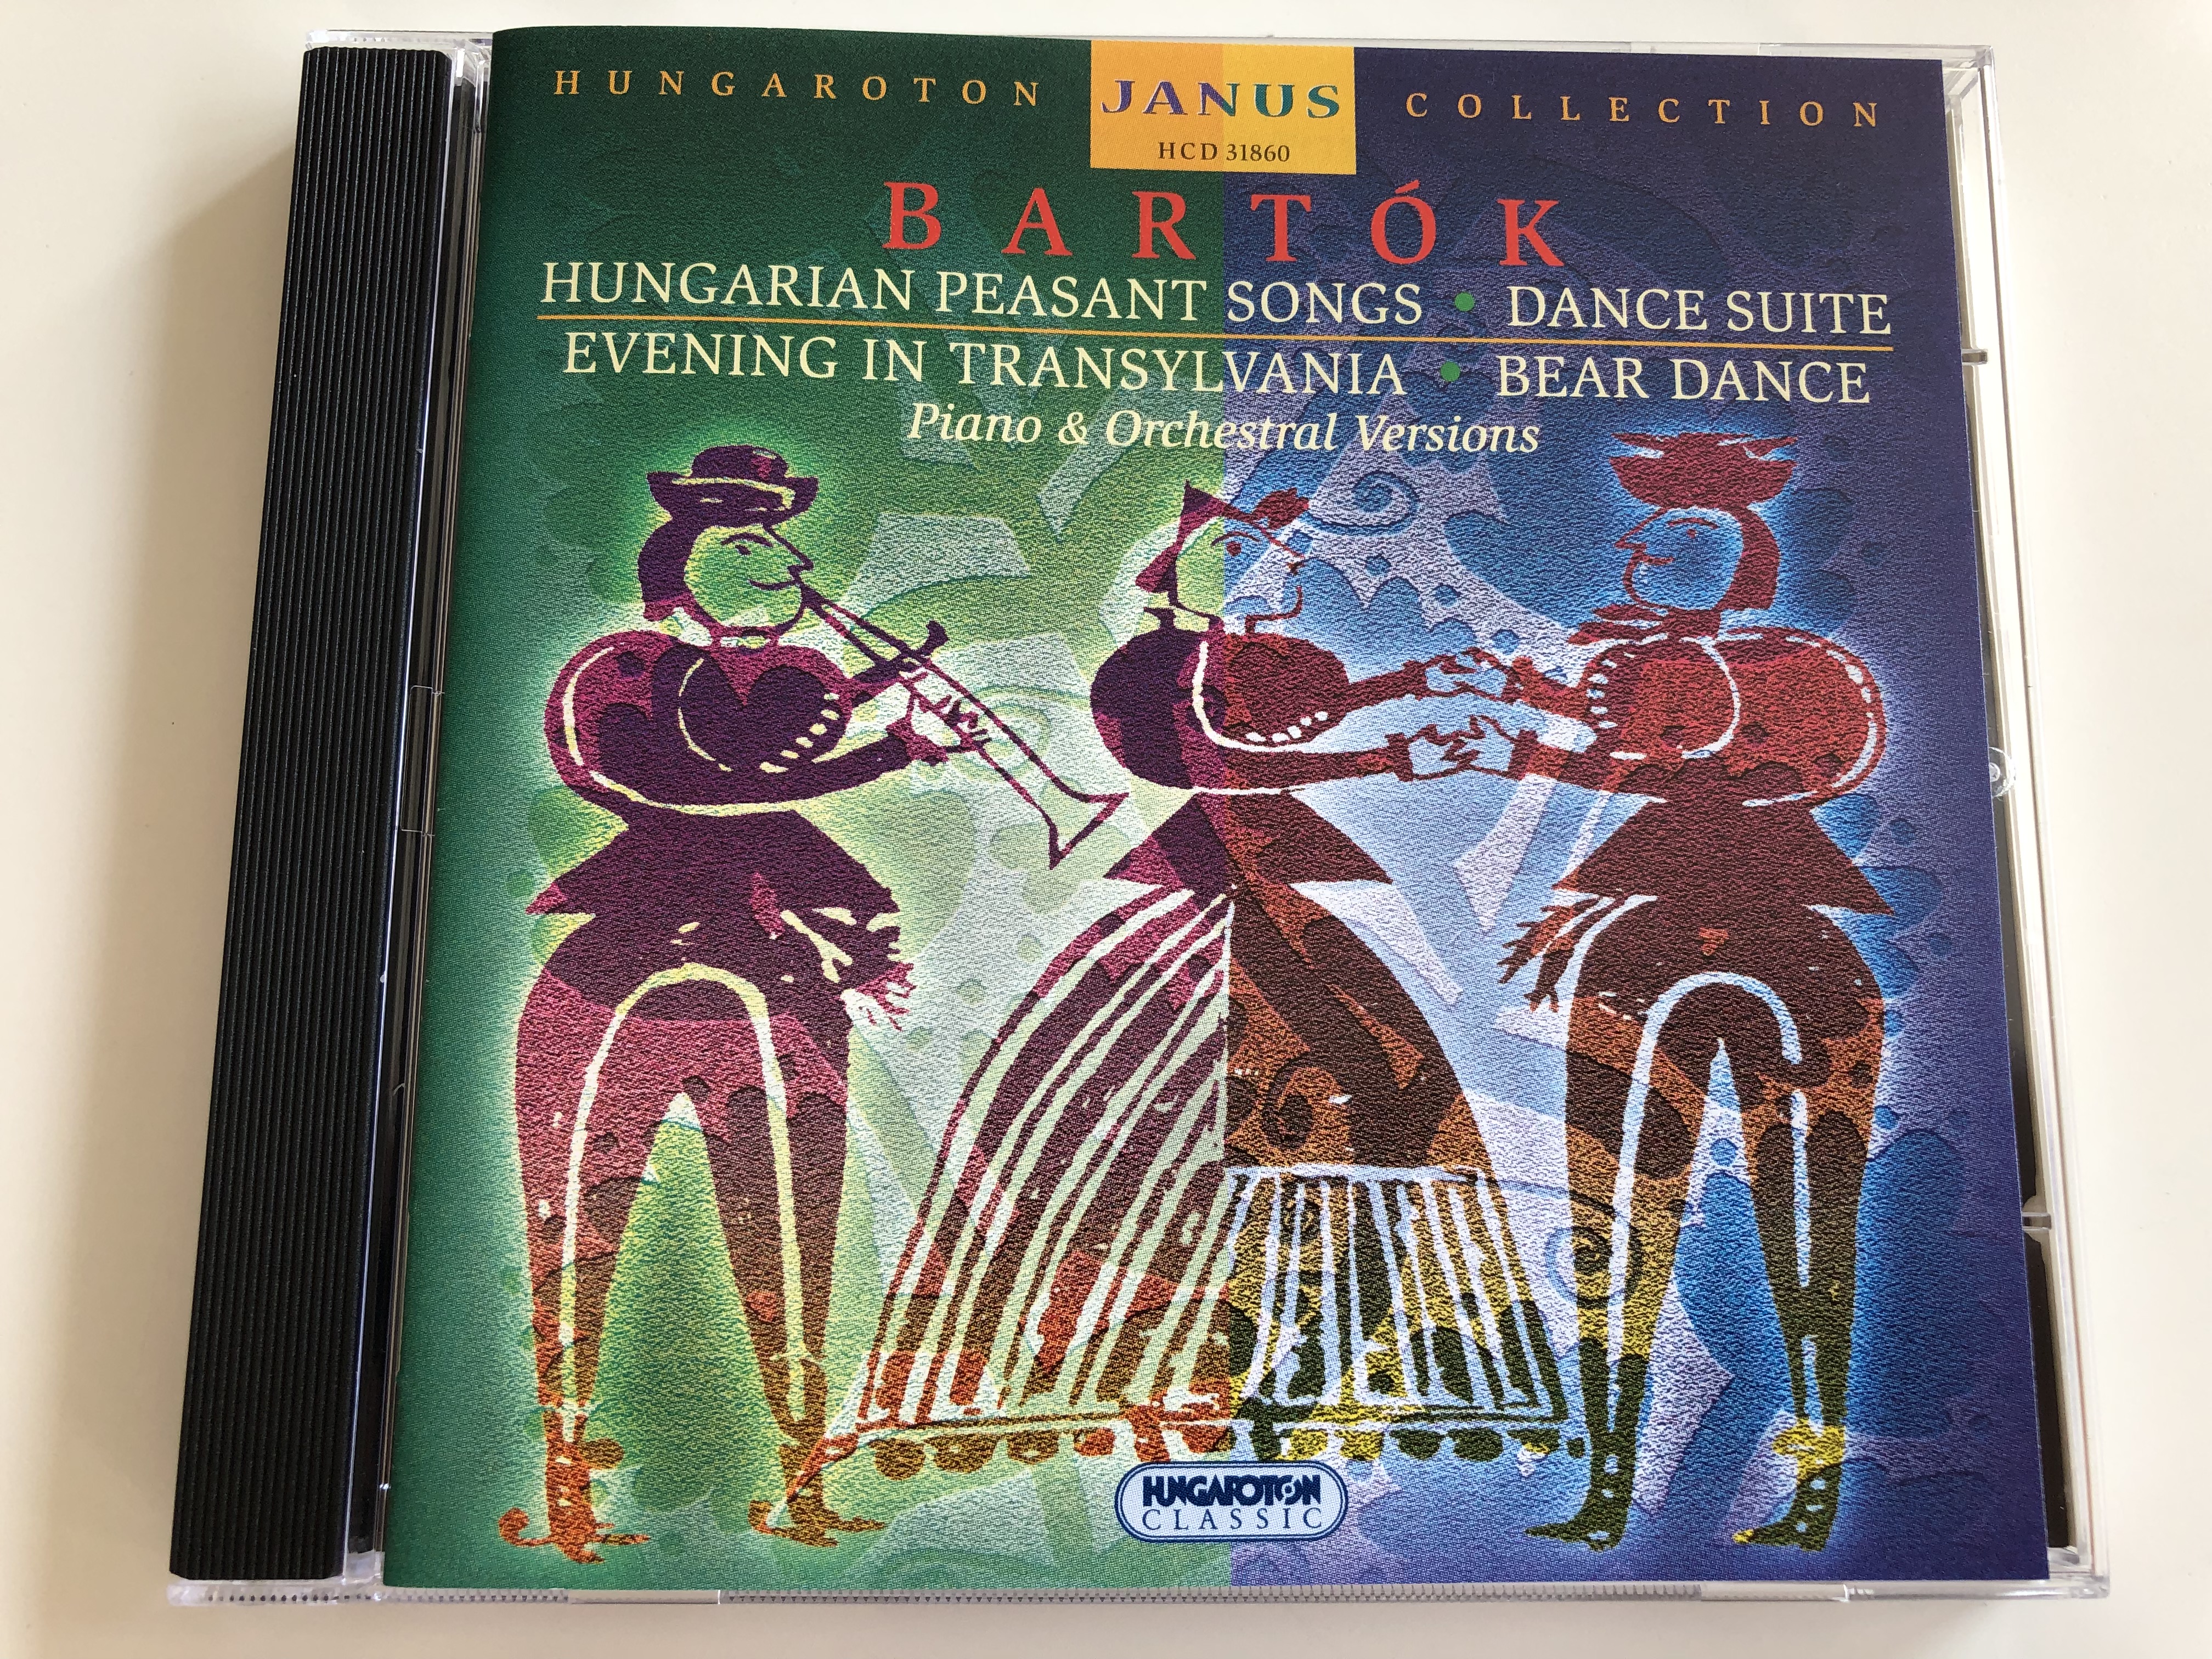 bart-k-hungarian-peasant-songs-dance-suite-evening-in-transylvania-bear-dance-piano-orchestral-versions-hungaroton-janus-collection-hcd-31860-audio-cd-2001-1-.jpg